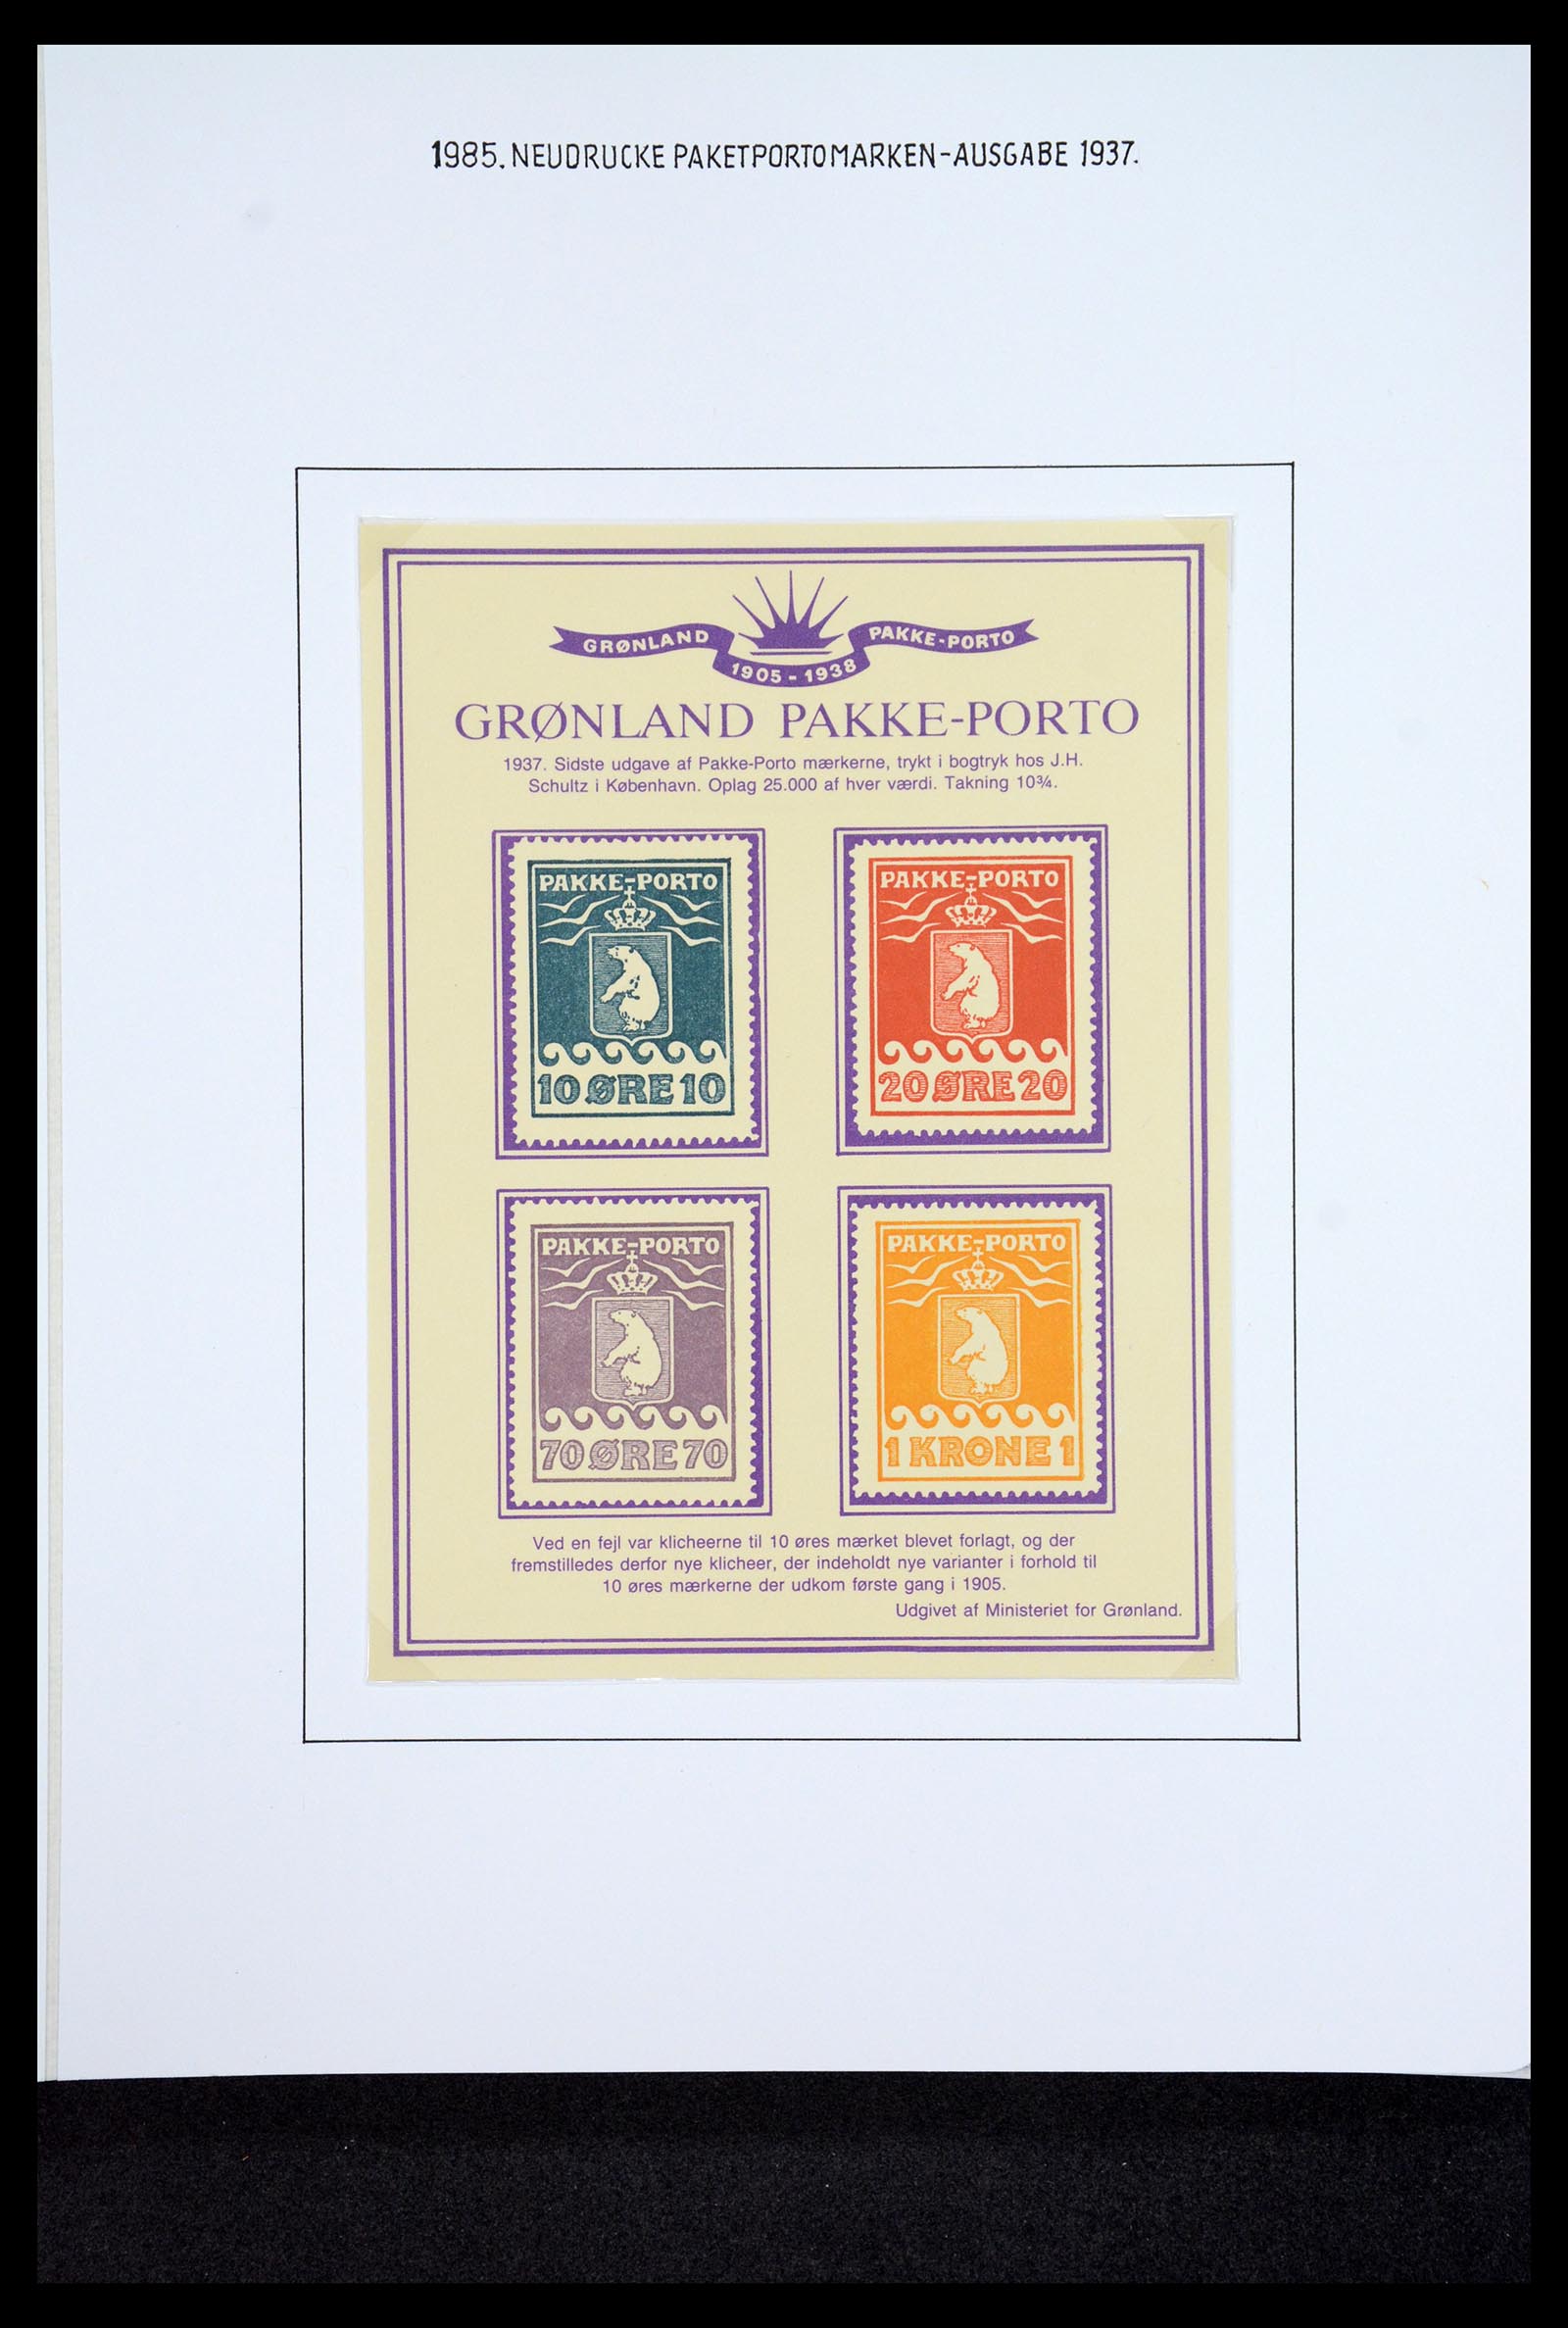 36748 017 - Stamp collection 36748 Greenland pakke-porto 1905-1930.